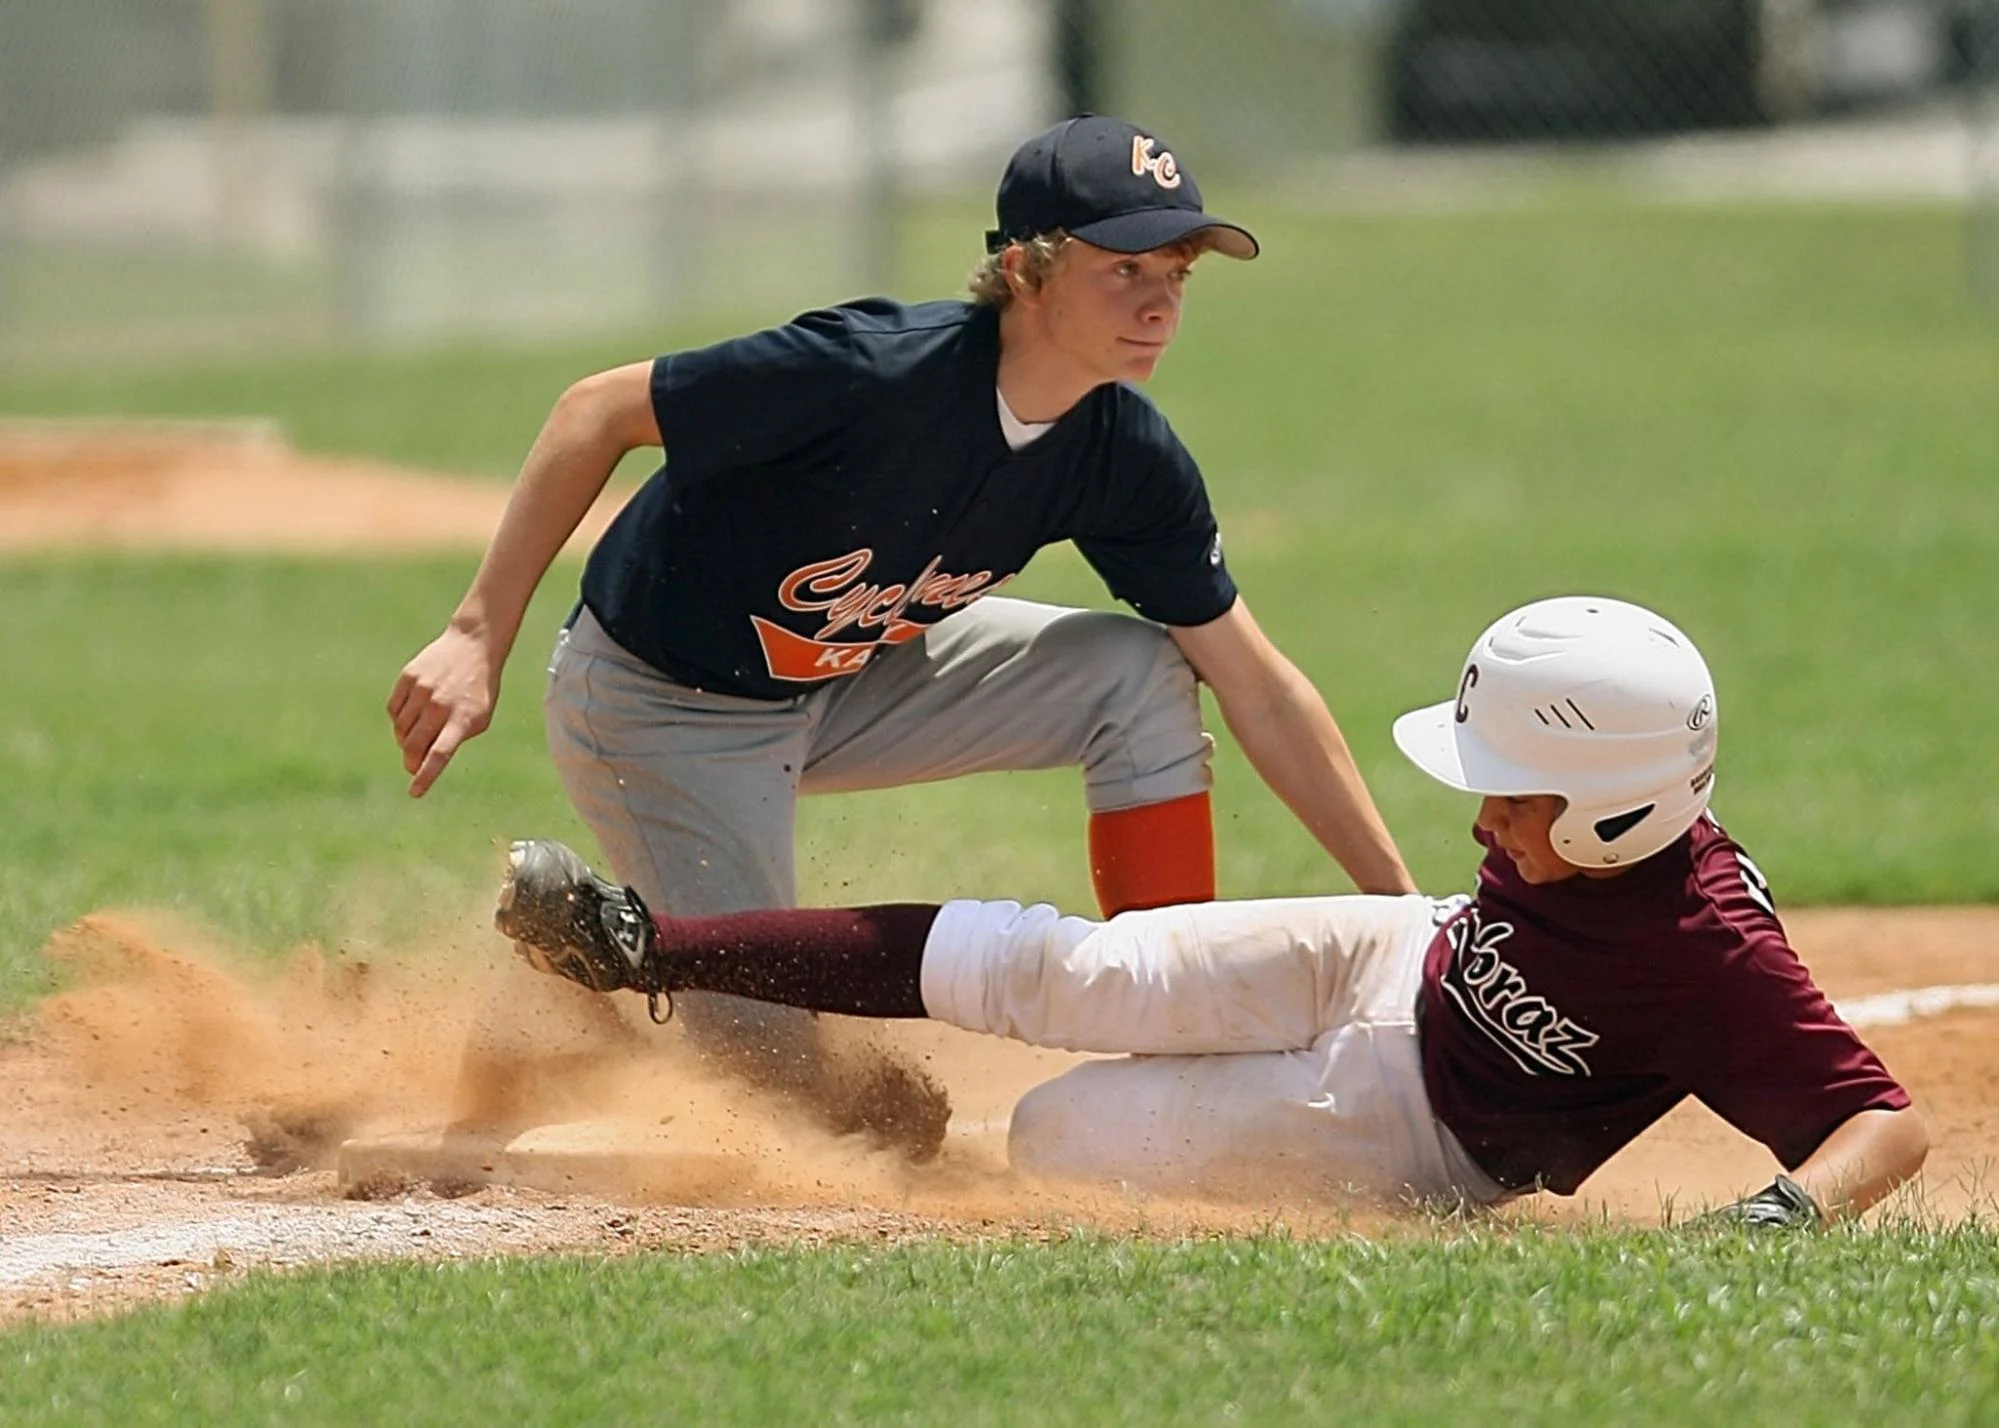 a youth baseball player sliding into third base